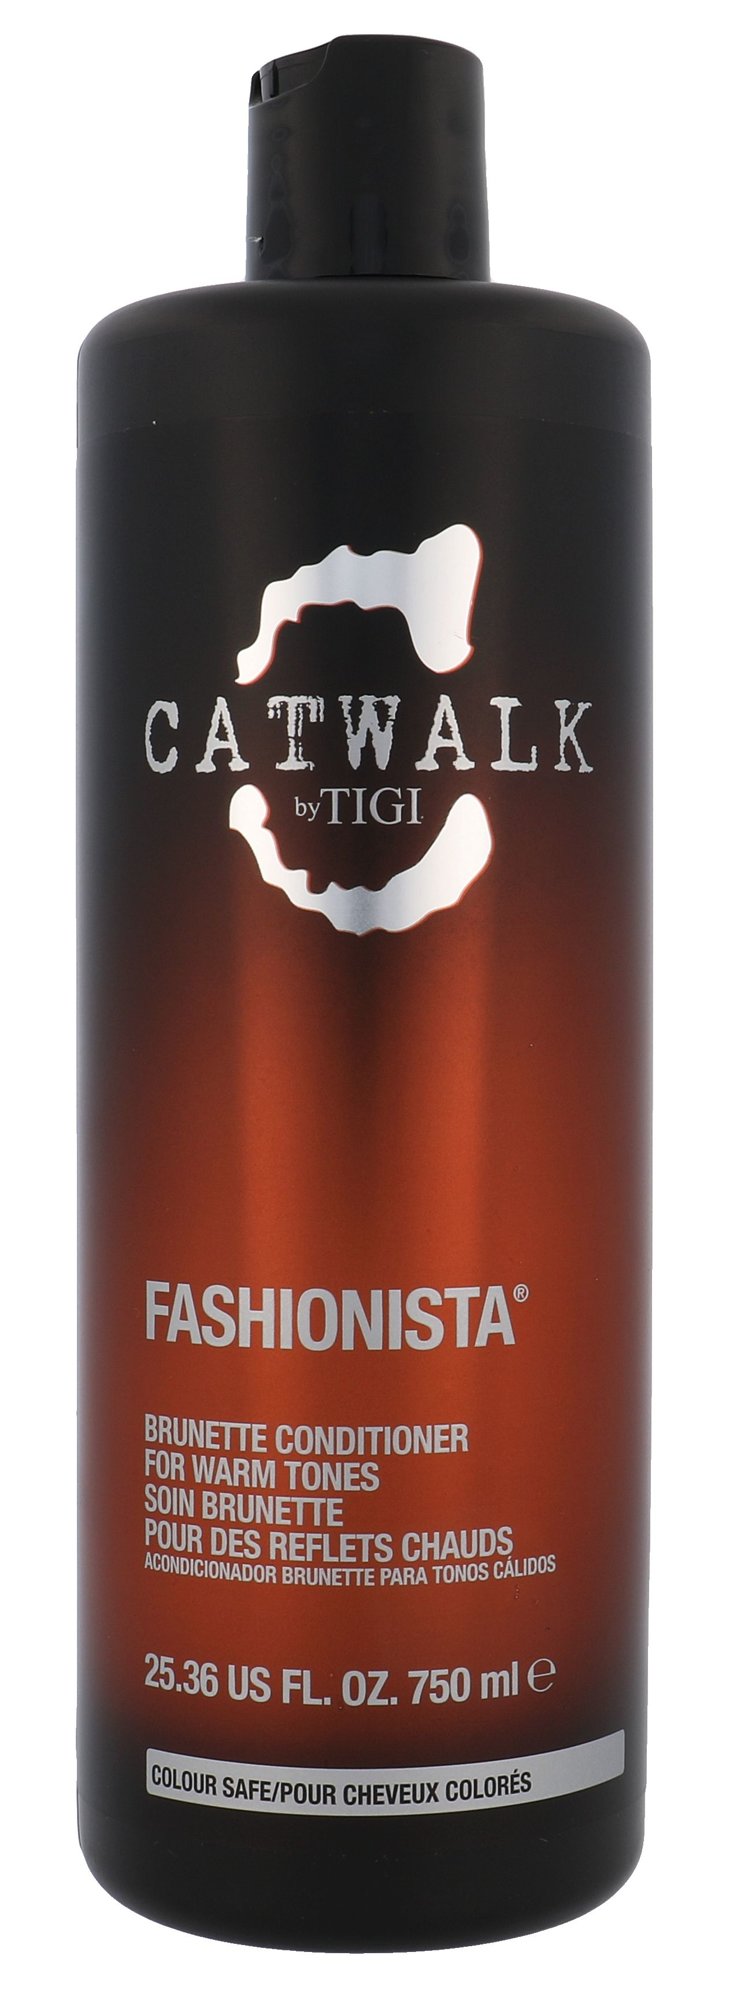 Tigi Catwalk Fashionista Brunette kondicionierius